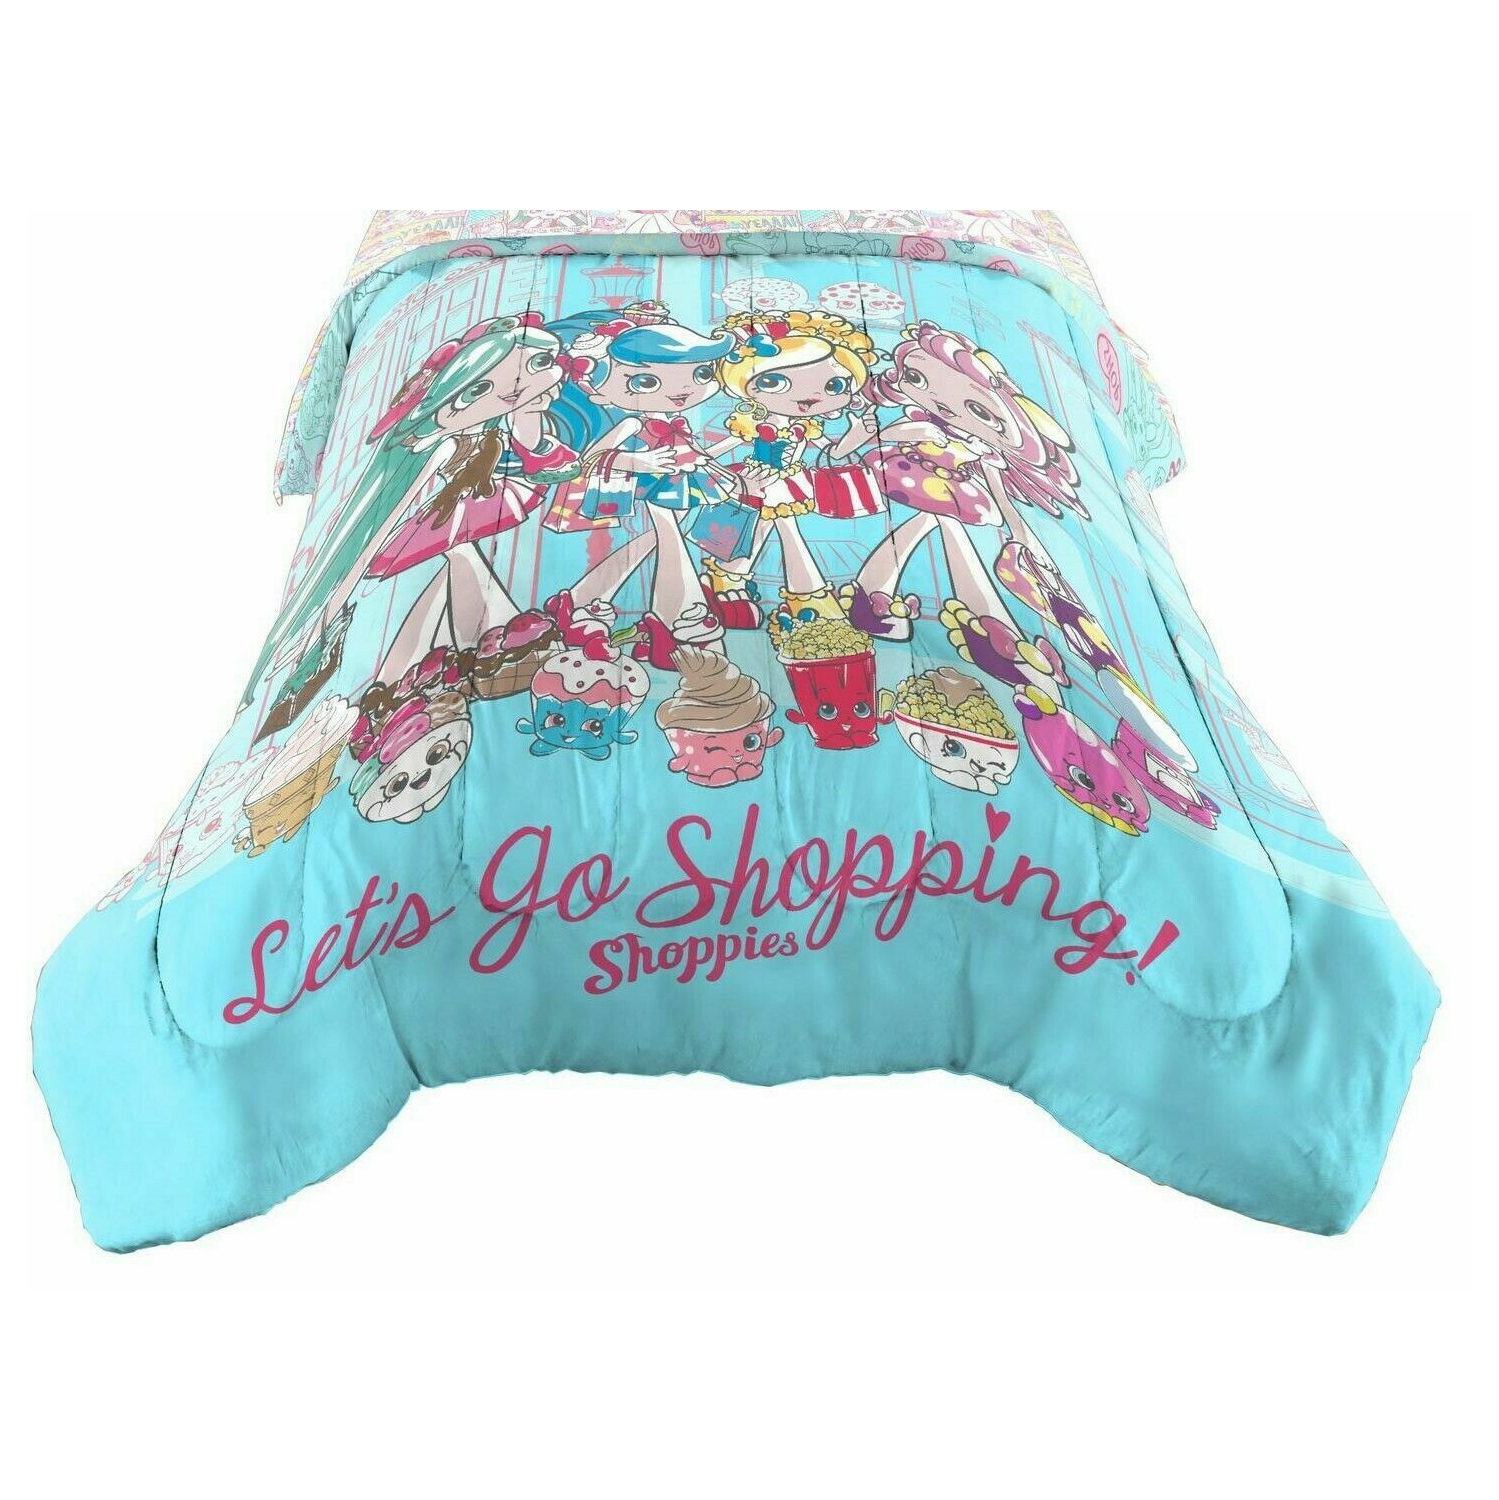 Shopkins shoppies Twin/Full Comforter for Kids - 72" x 86"